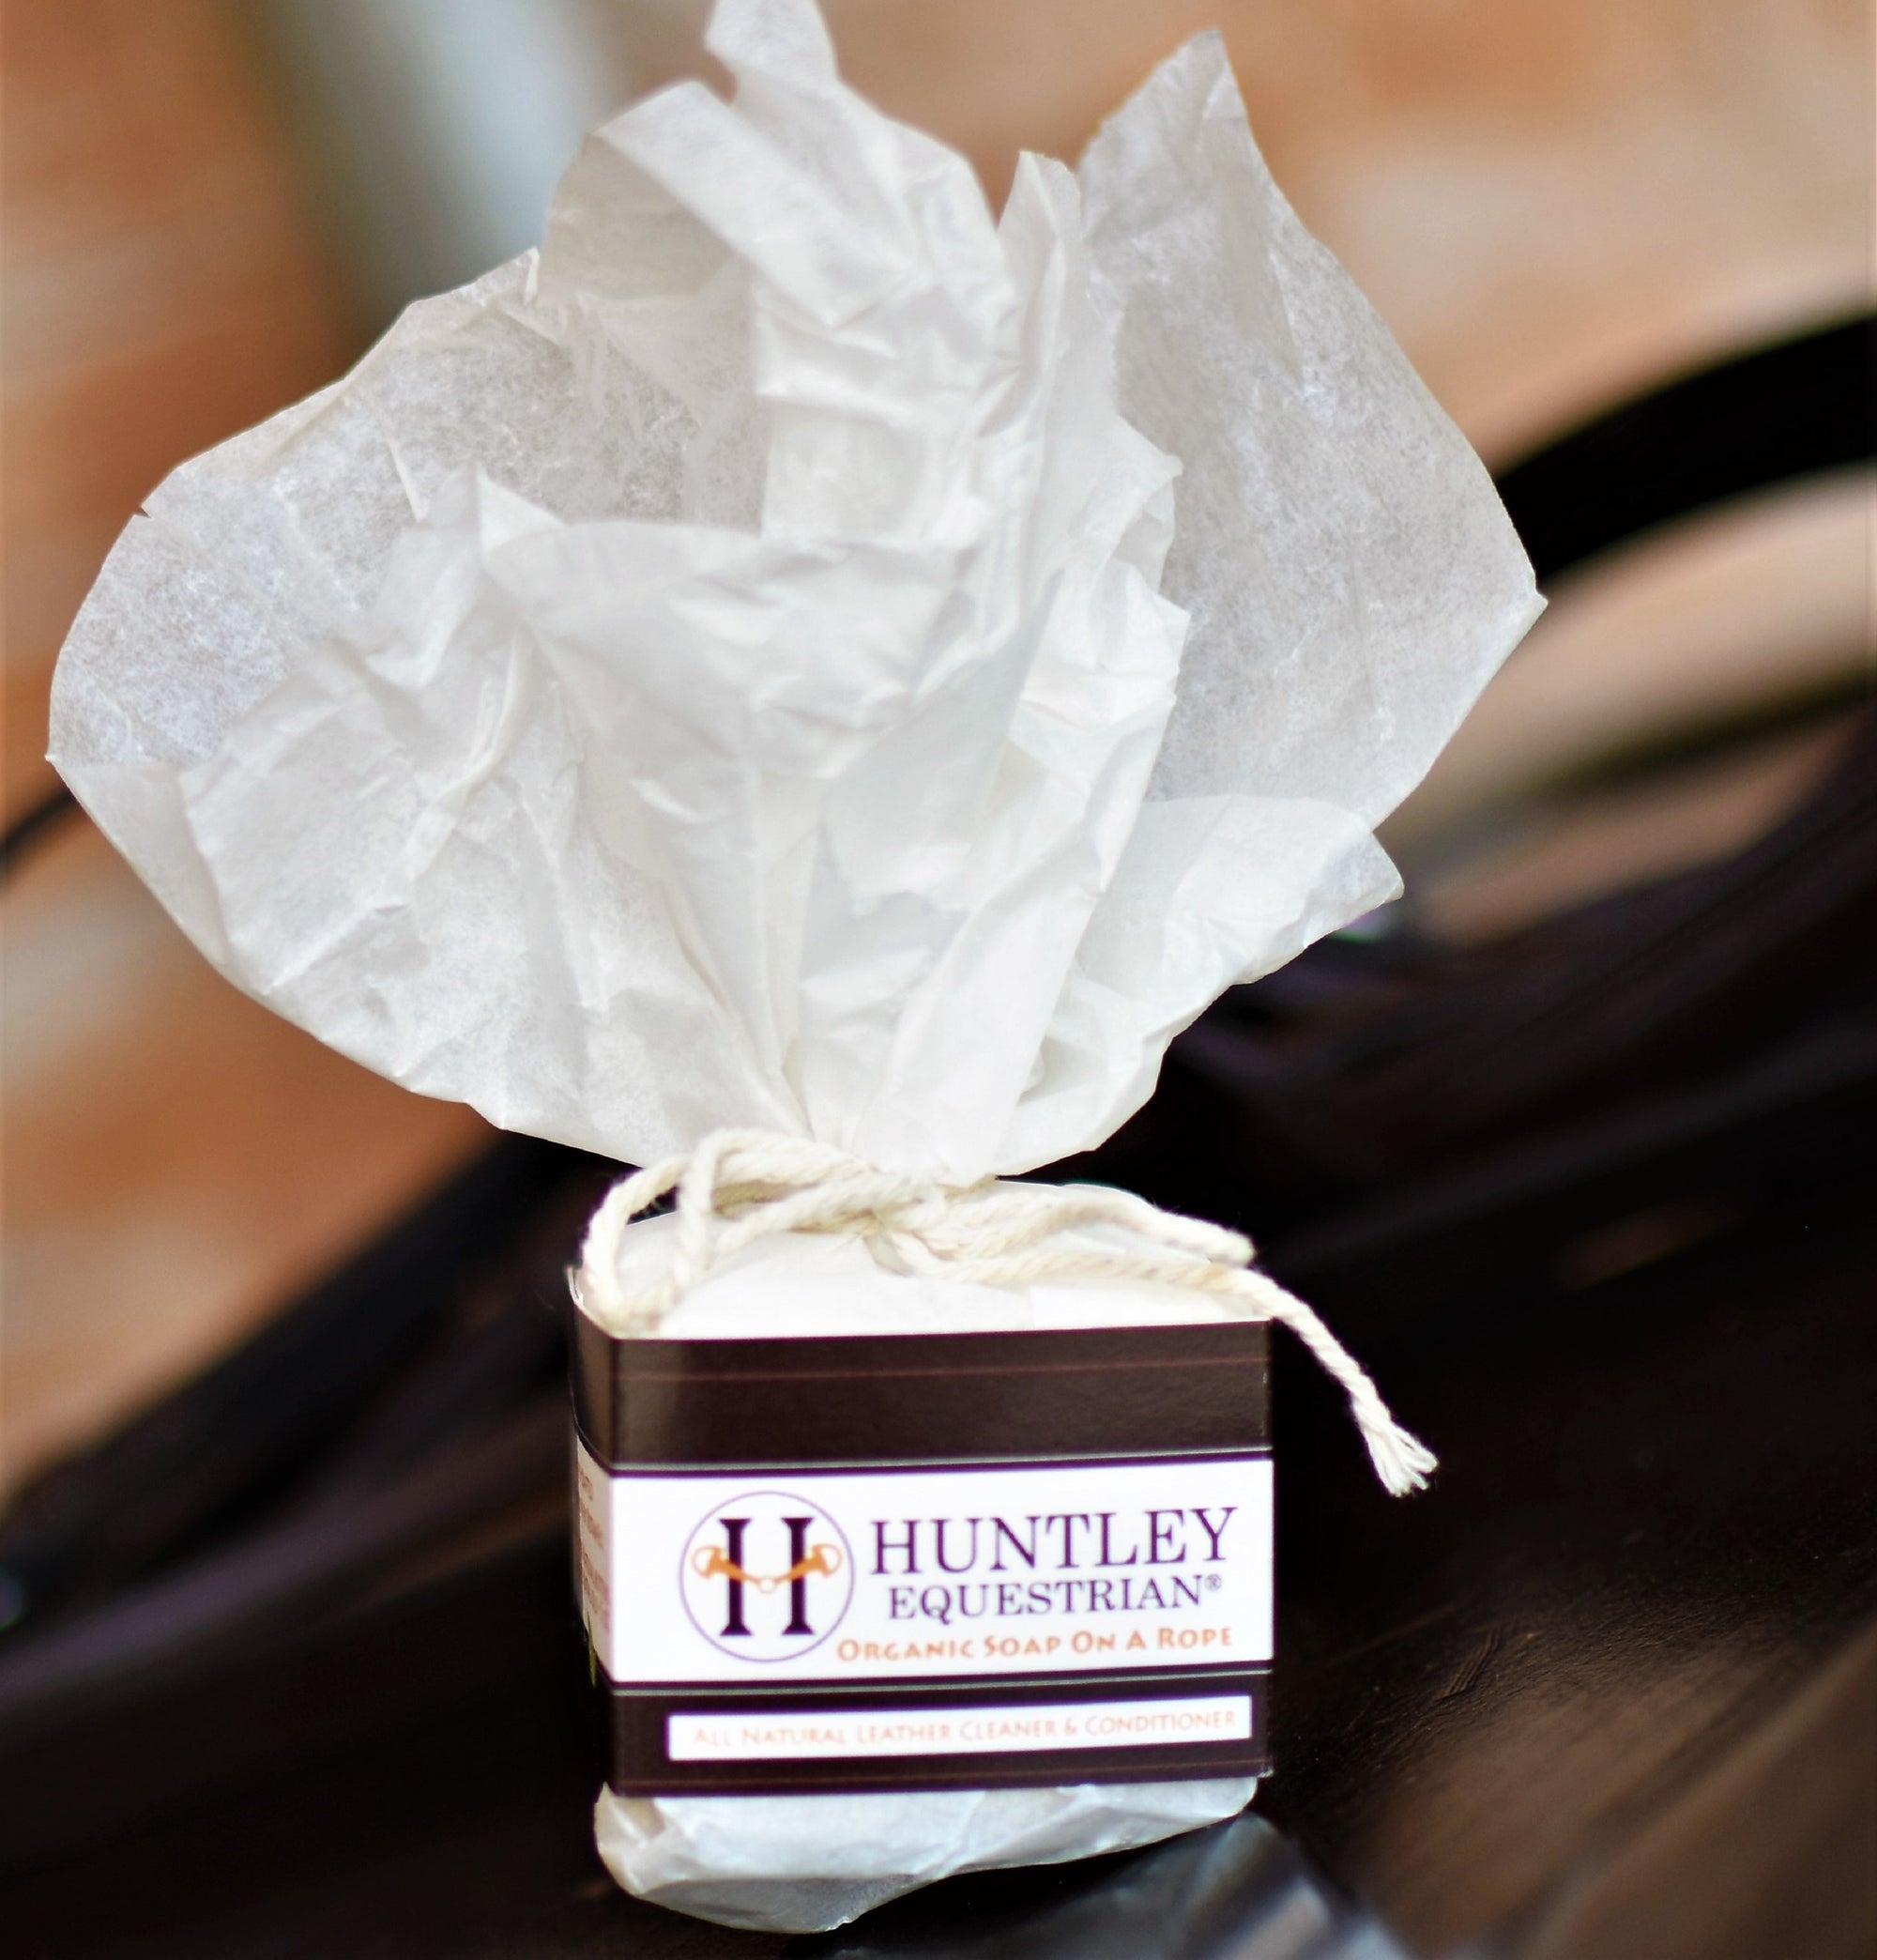 Huntley Equestrian Organic Leather Soap on a Rope - Huntley Equestrian 